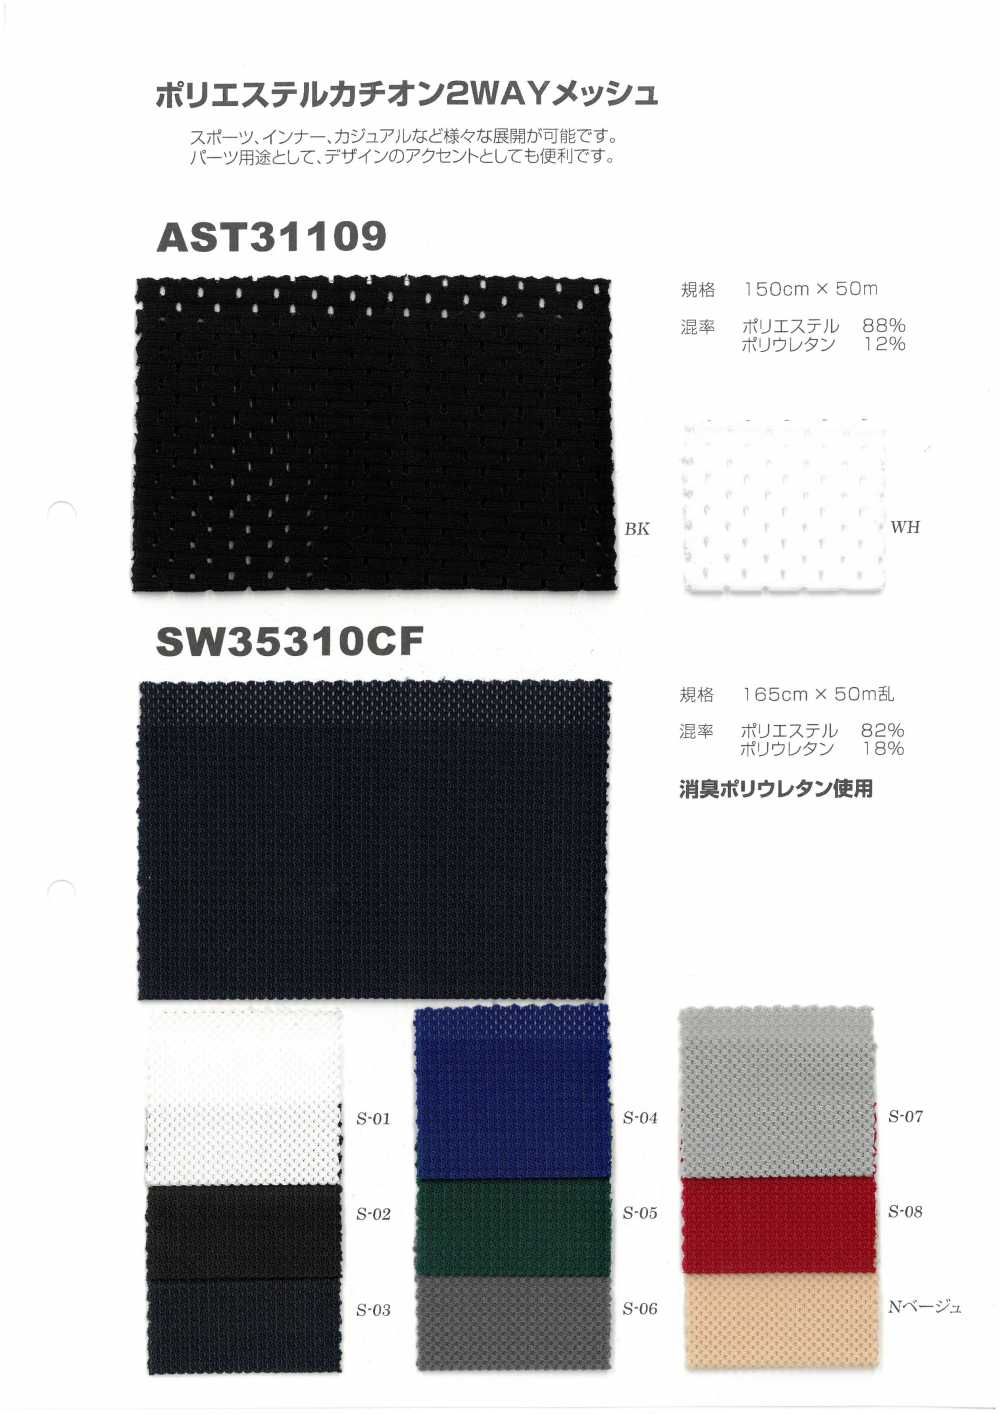 SW35310CF Uses PE Cation Mesh Deodorant Polyurethane[Textile / Fabric] Japan Stretch